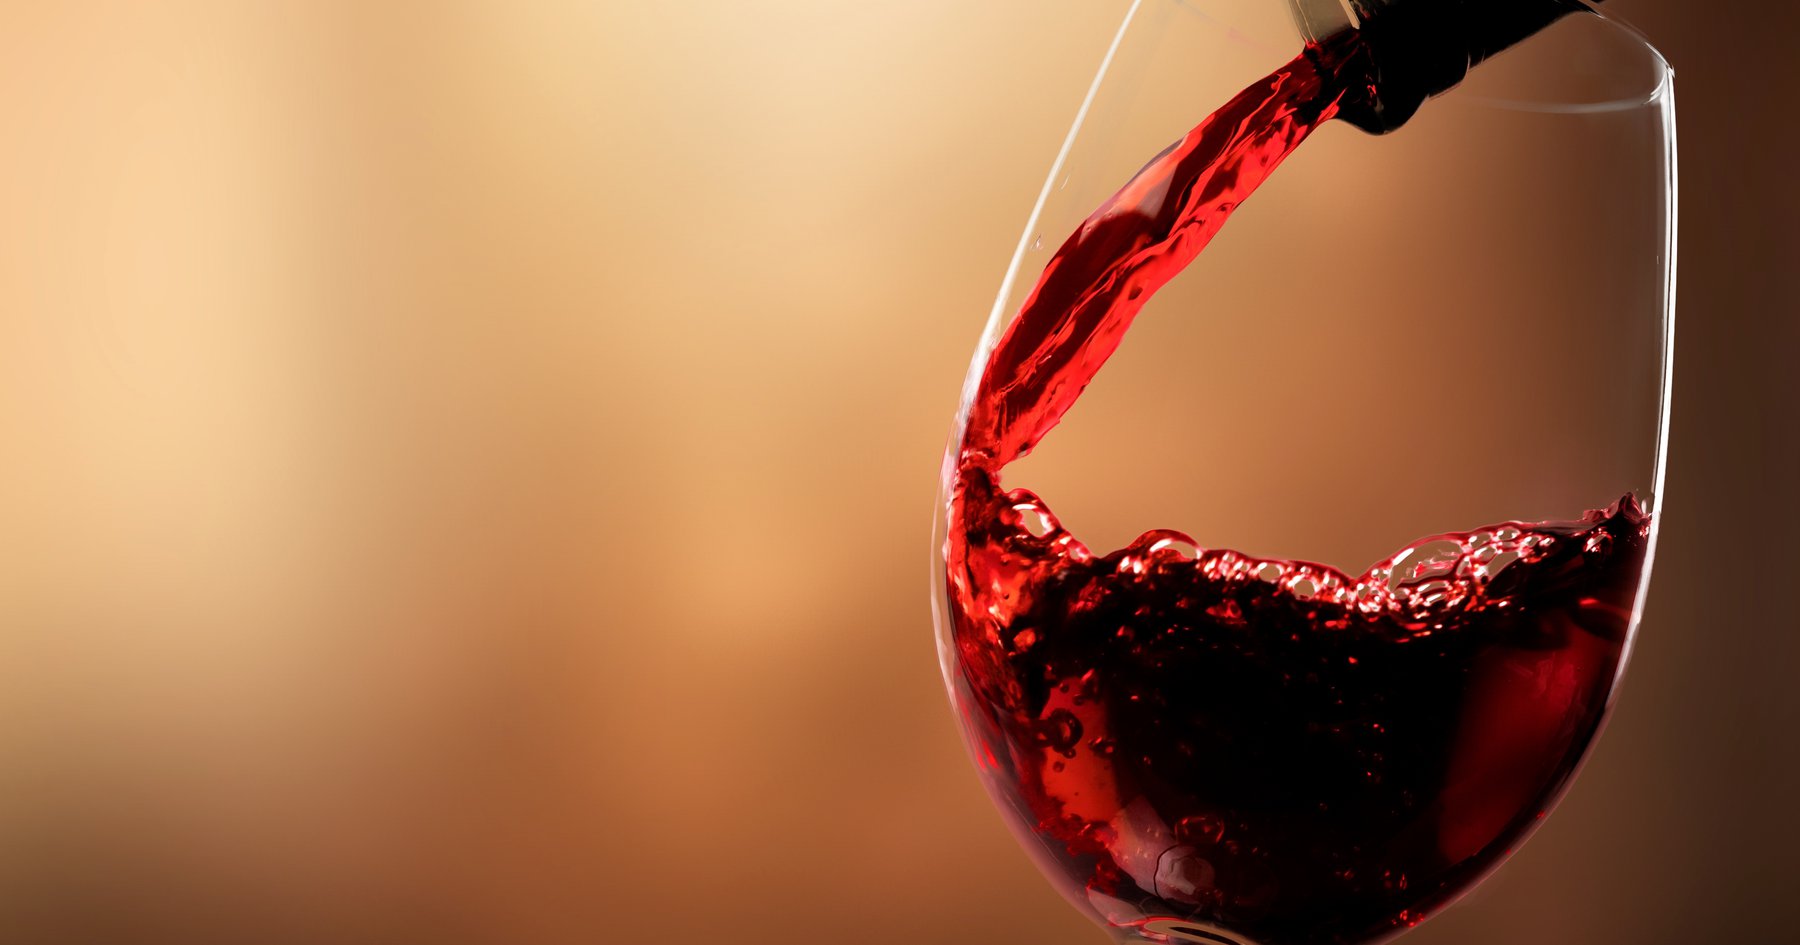 https://saludconlupa.com/media/images/red-wine-pouring-from-bottle-glas.2e16d0ba.fill-1800x945.jpg